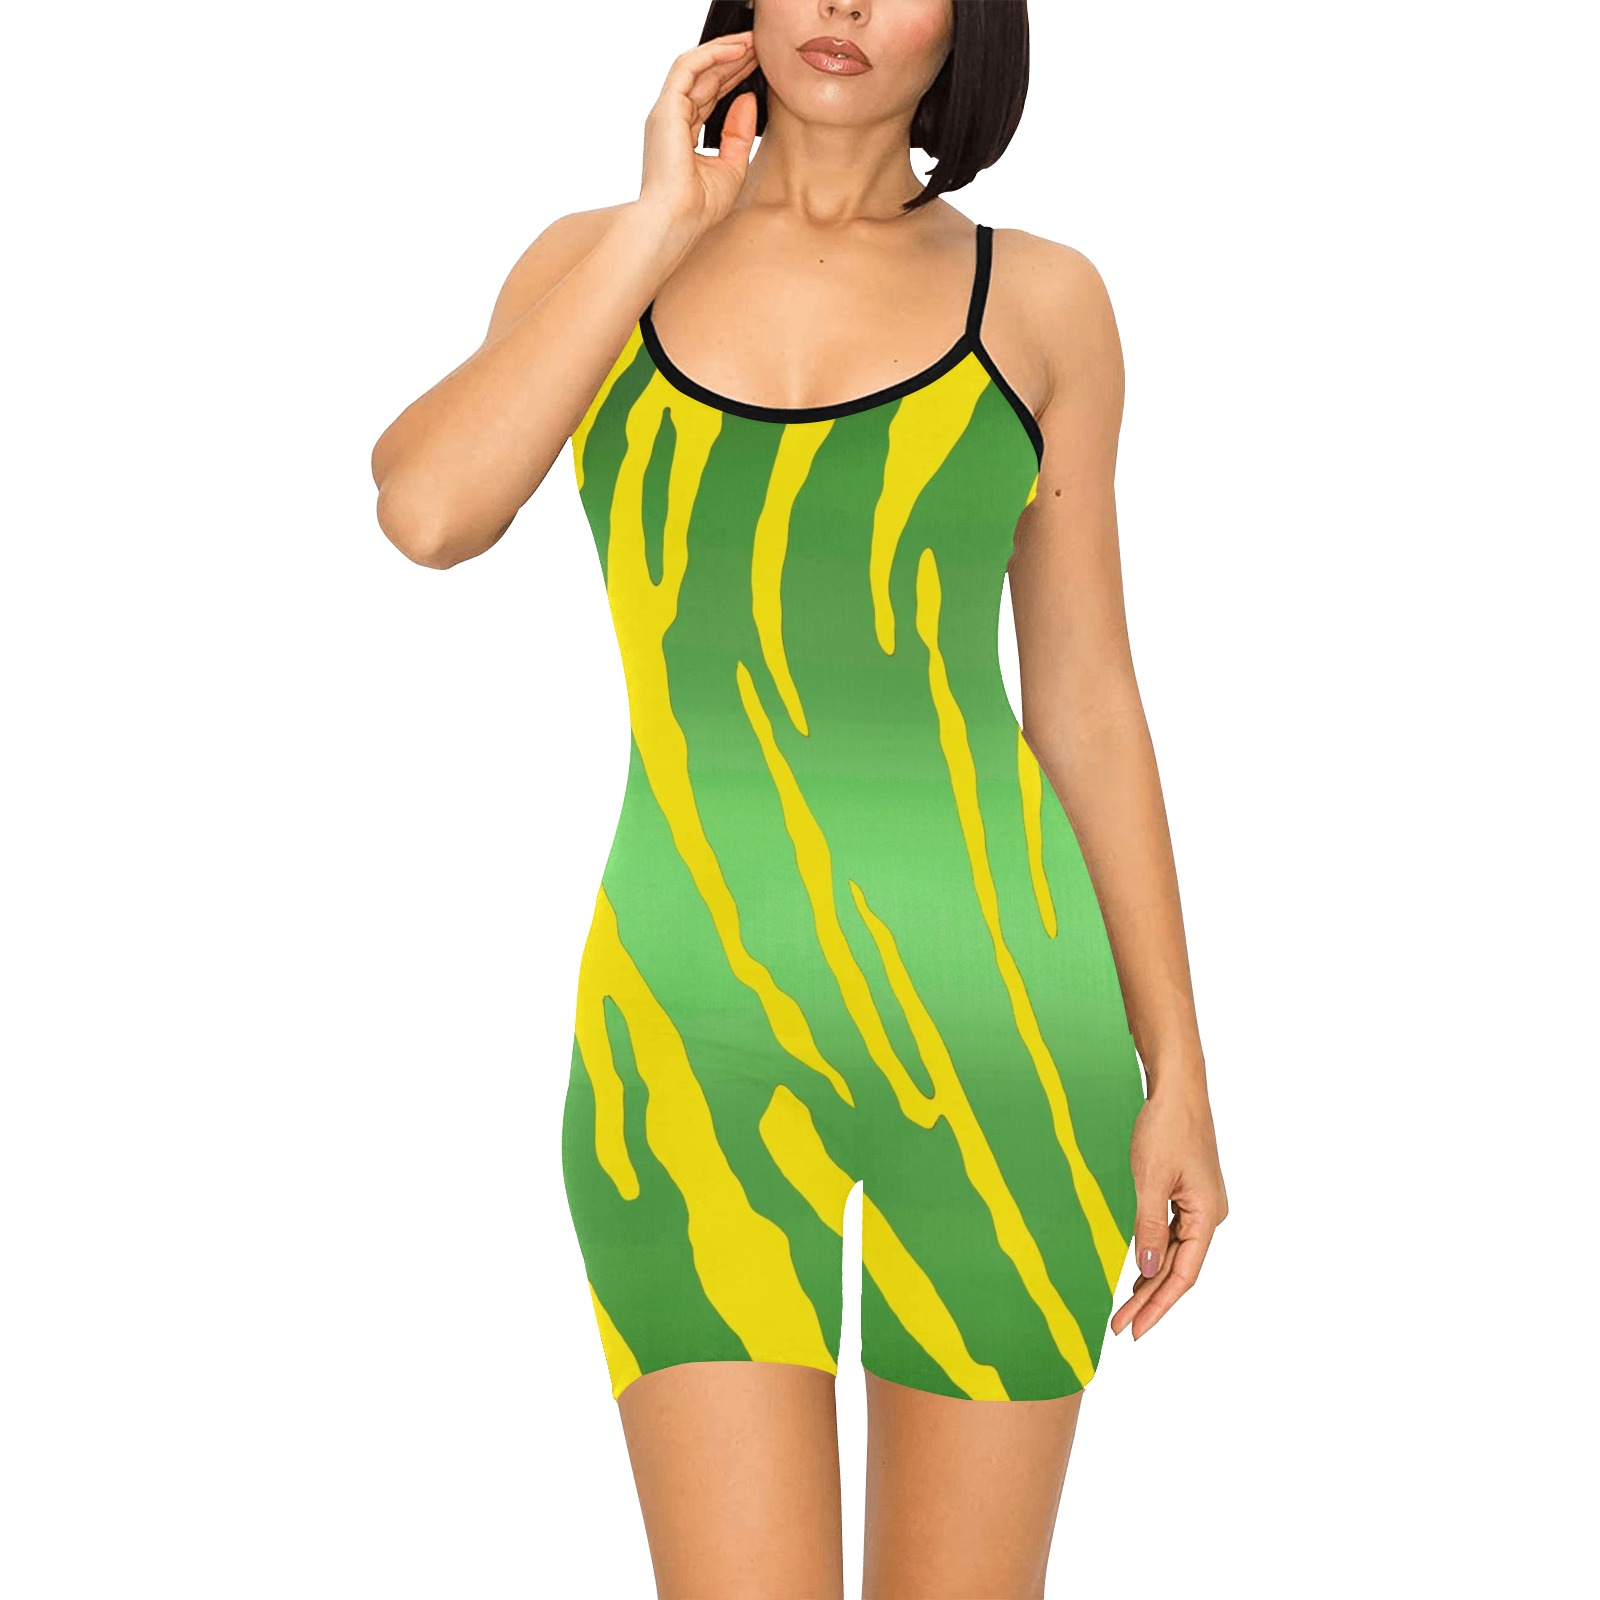 Metallic Tiger Stripes Green Yellow Women's Short Yoga Bodysuit